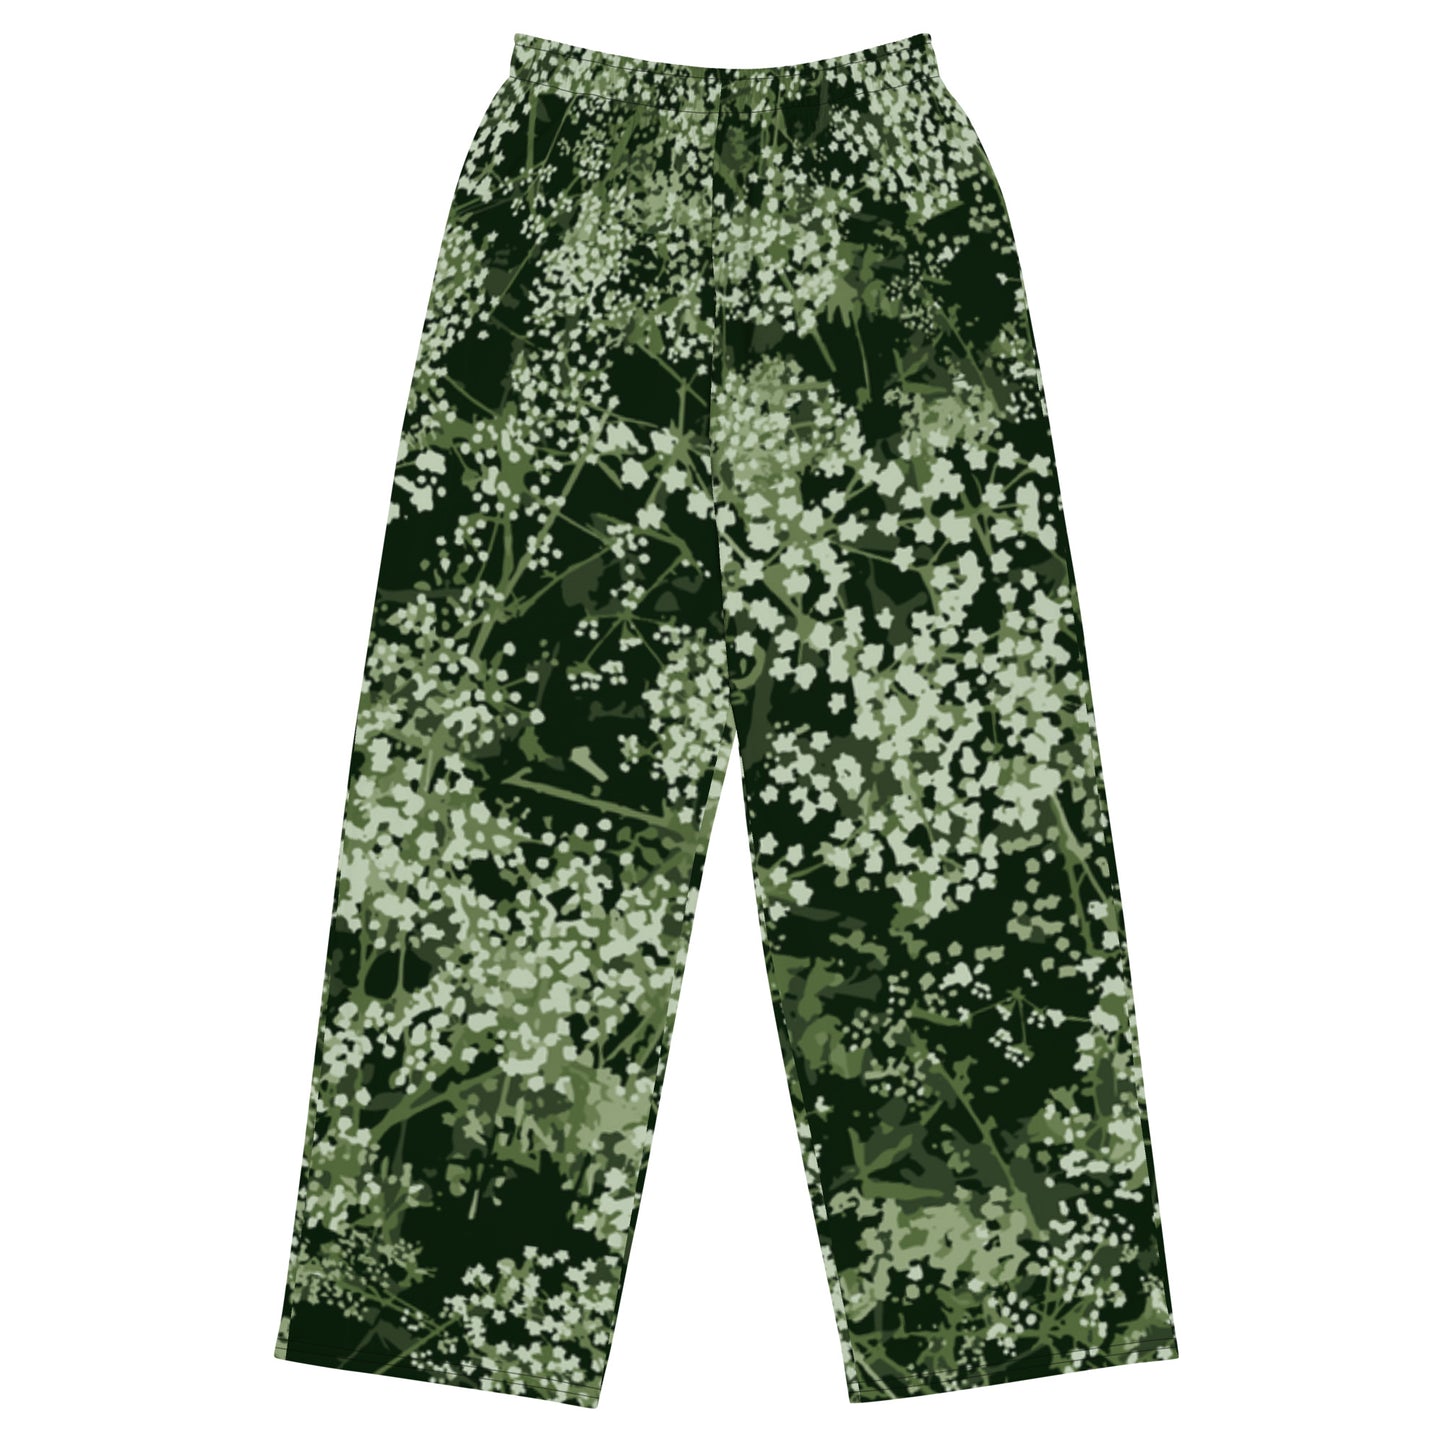 Valkovuokko - Unisex summer wide-leg pants - Pants- Print N Stuff - [designed in Turku Finland]